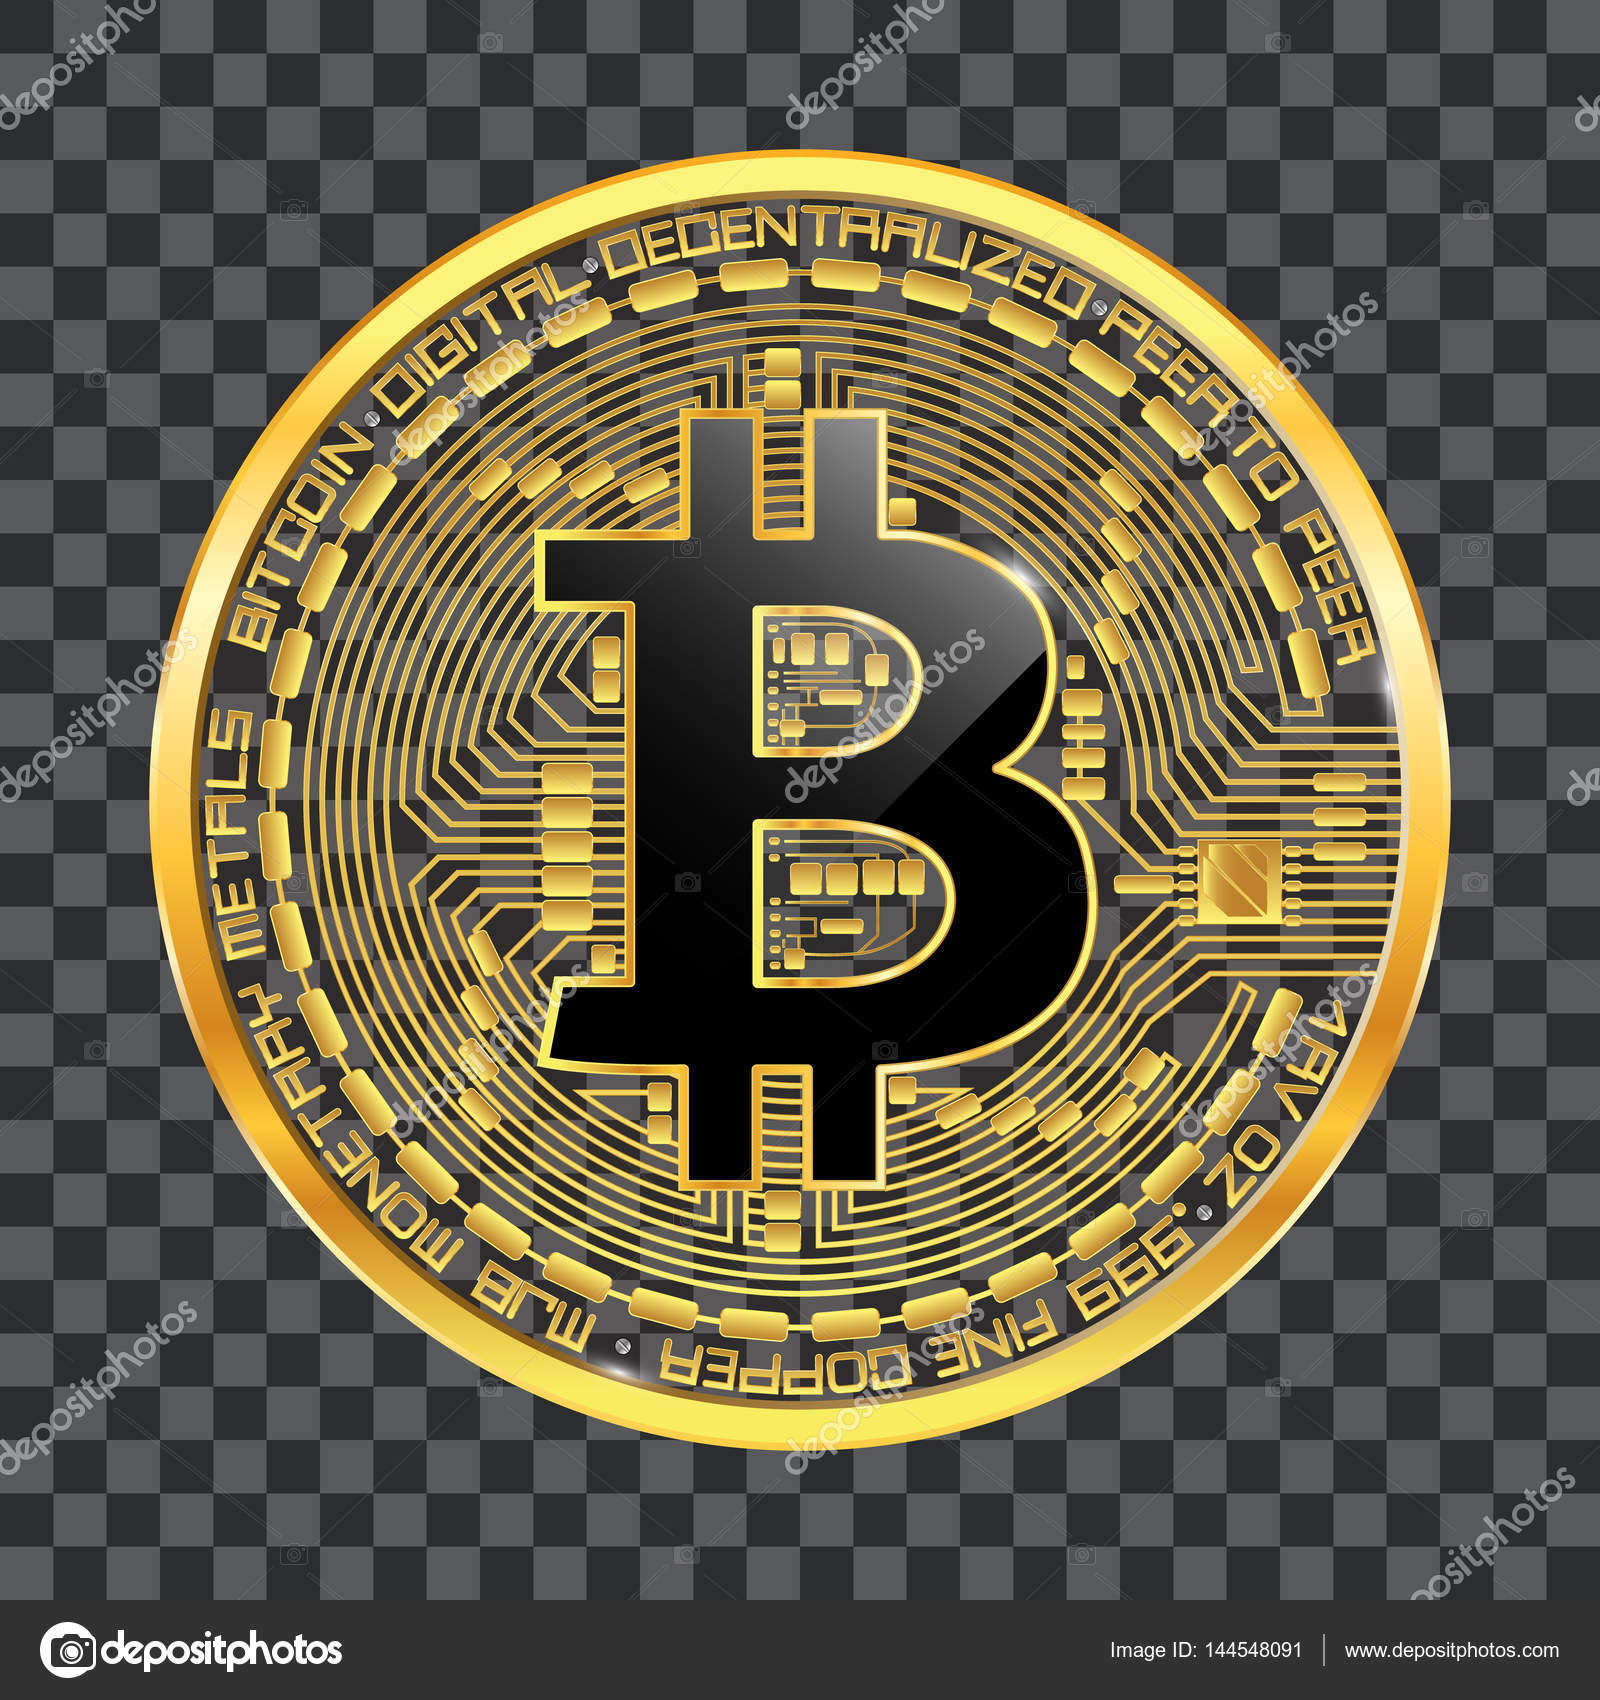 Simbolo de bitcoin cash почему не растет эфир вслед за биткоином